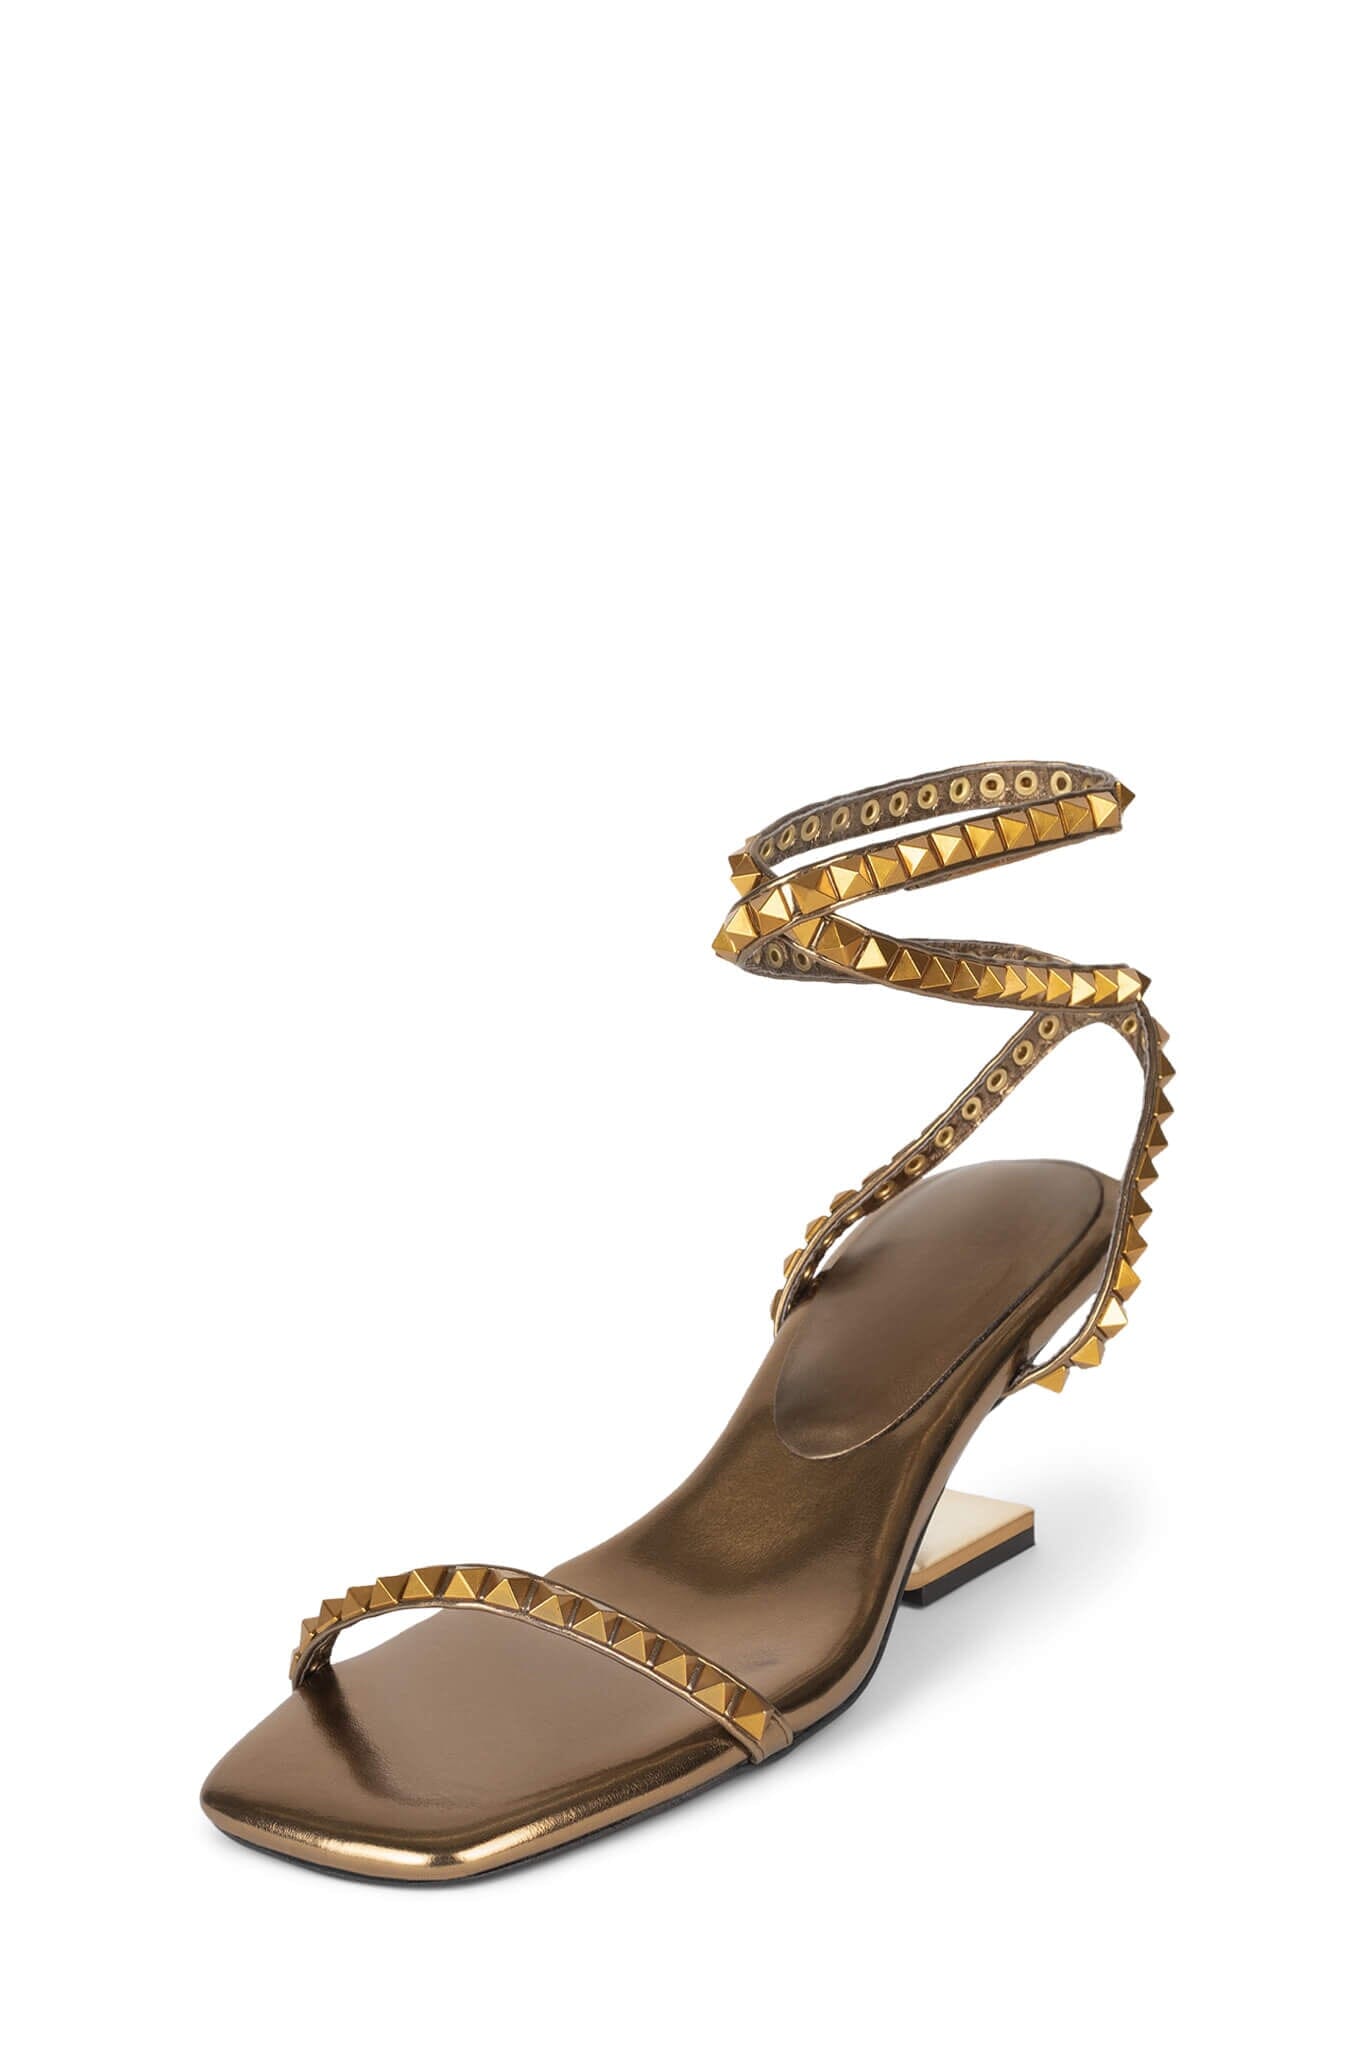 BOTTEGA VENETA Wrap-around snake-effect leather sandals